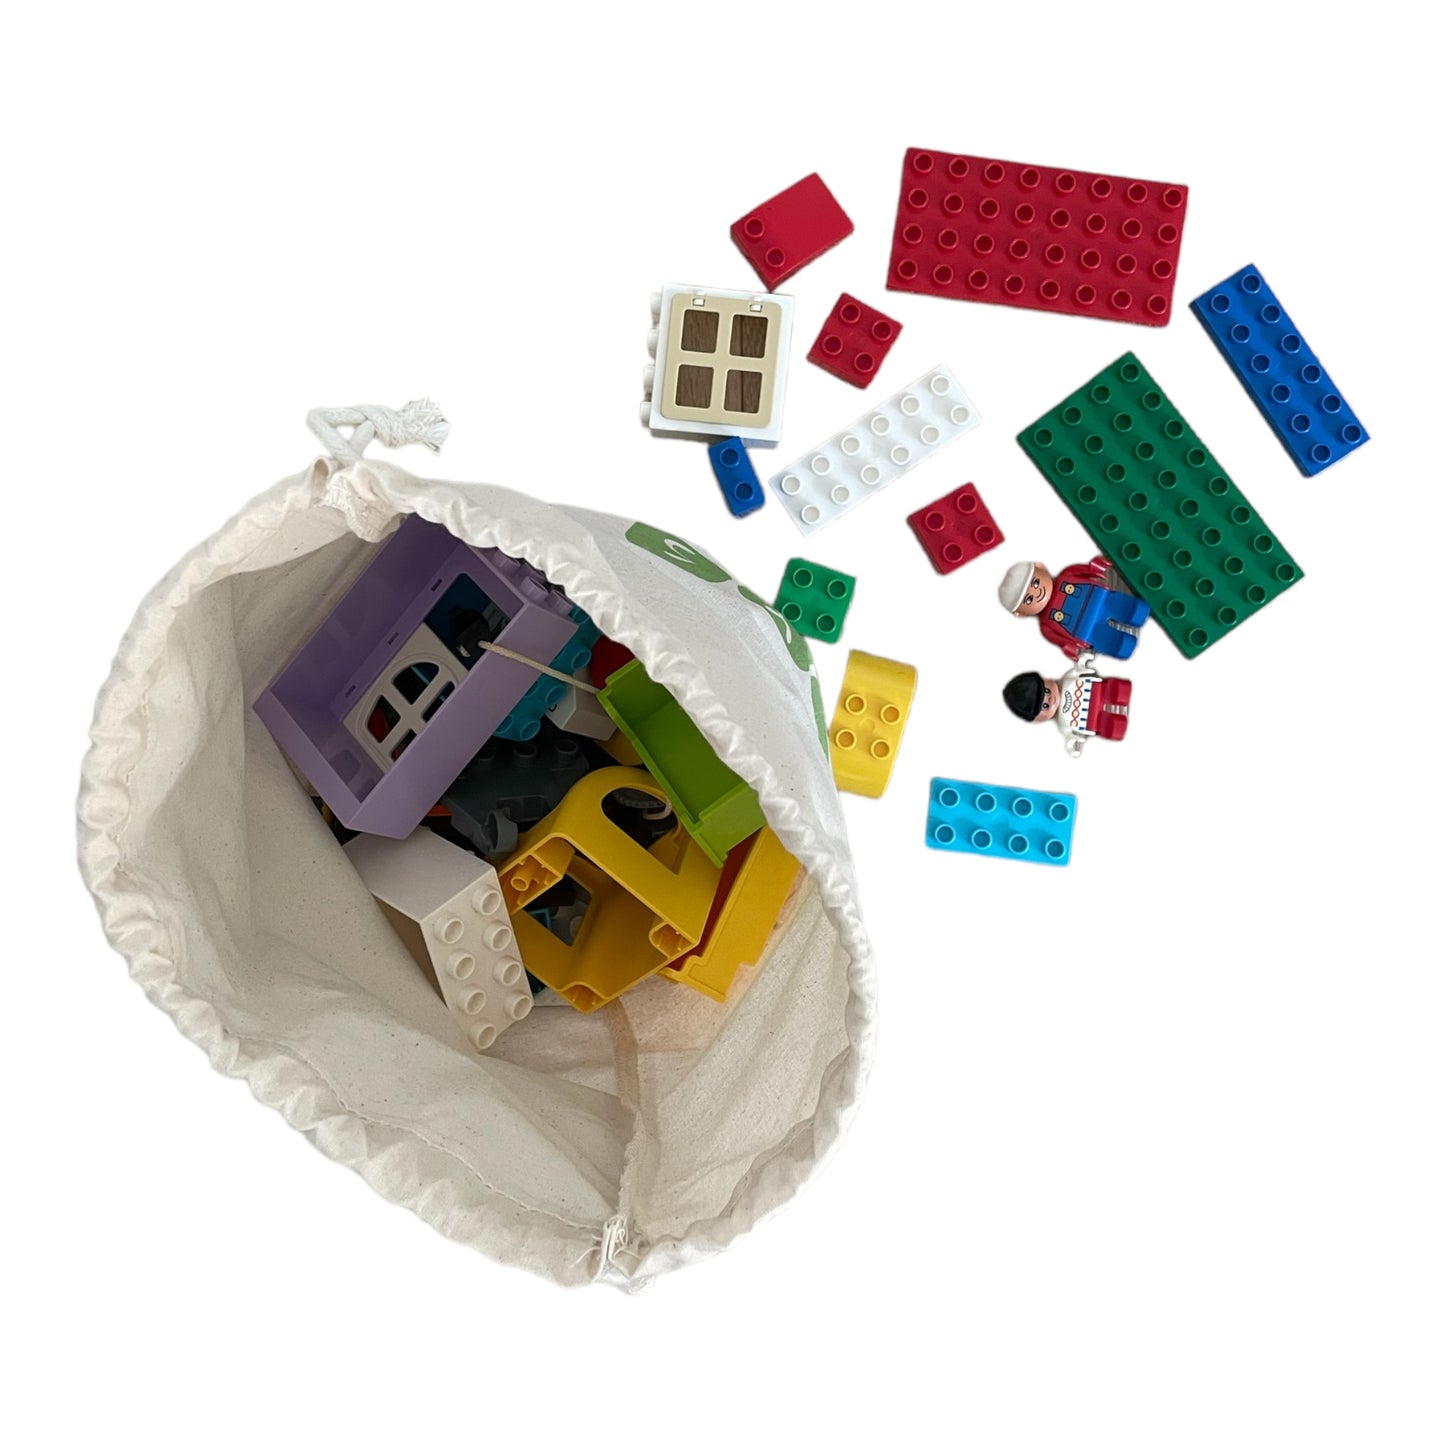 LEGO® DUPLO® Bag of 1 Kilo Used, cleaned Lego duplo bricks. As good as new!